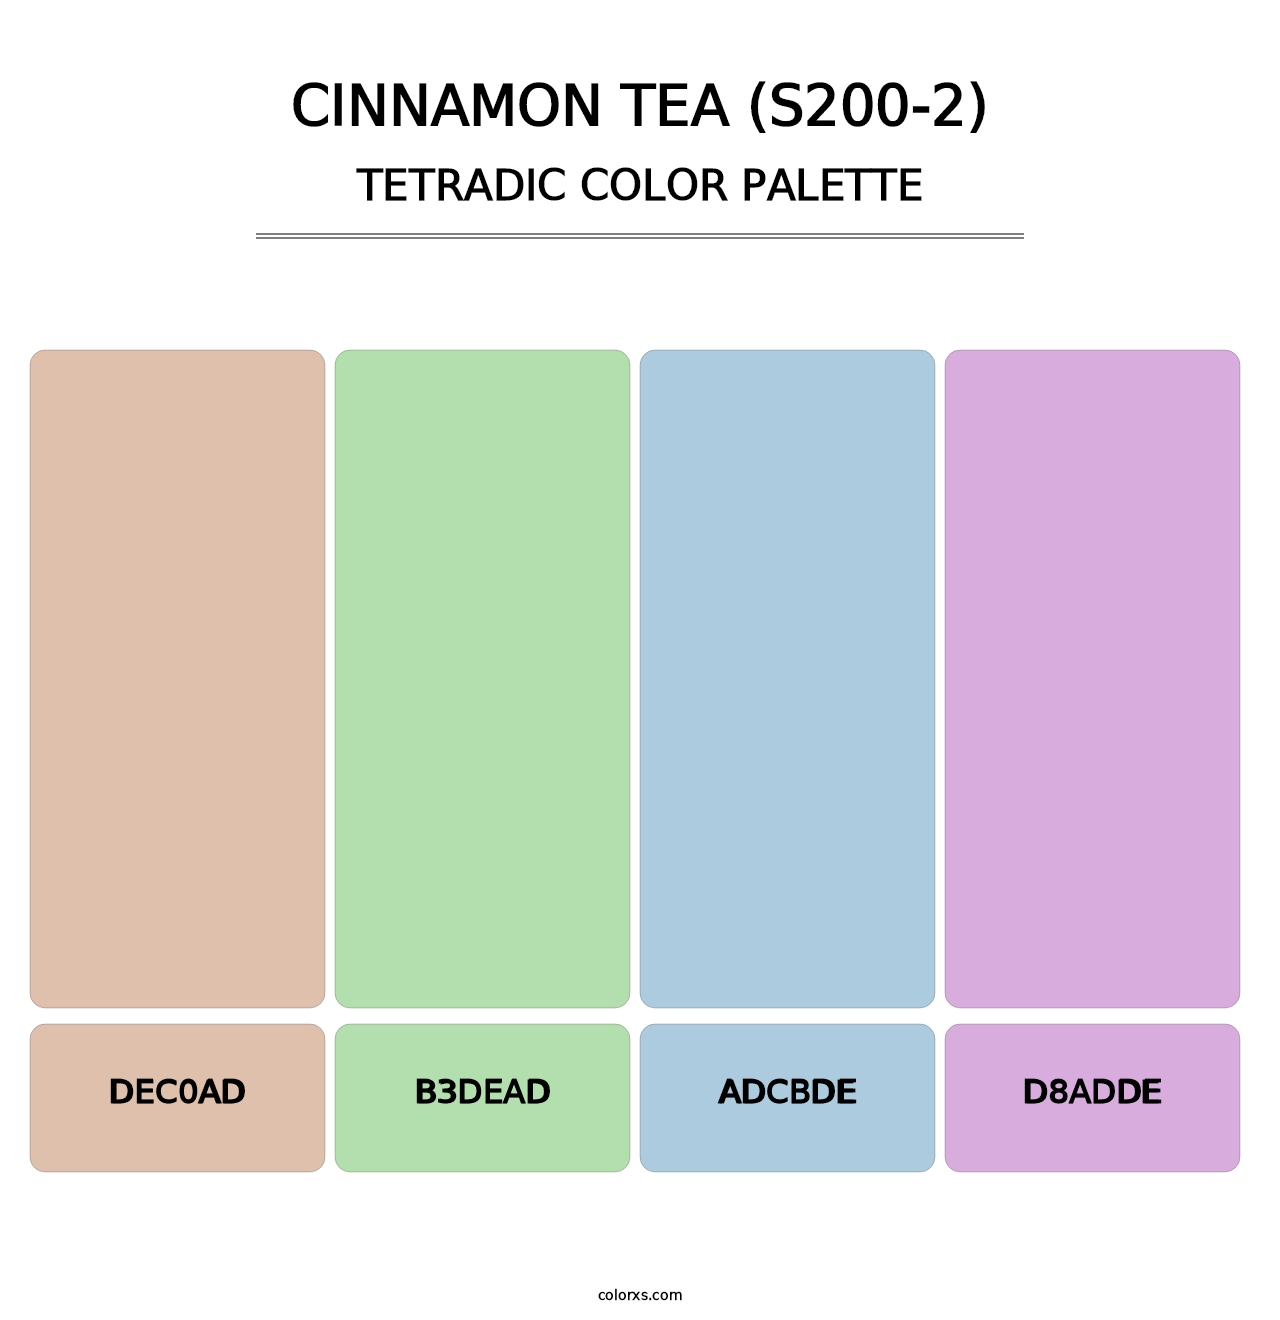 Cinnamon Tea (S200-2) - Tetradic Color Palette